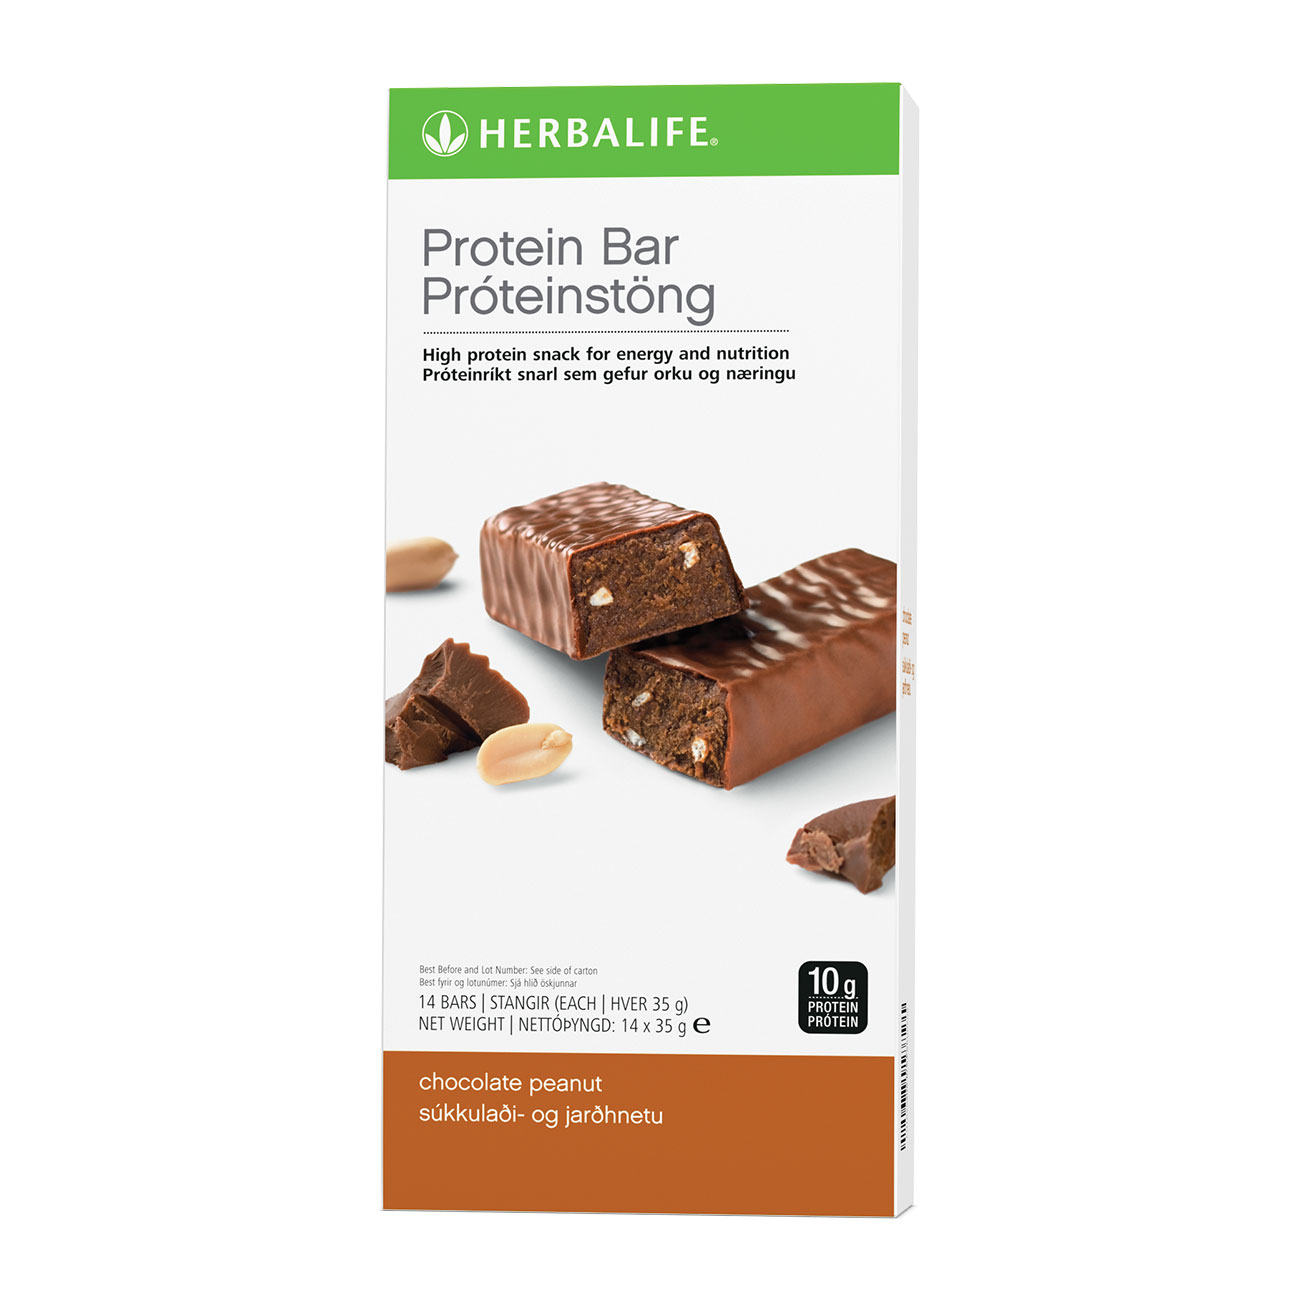 Protein Bars  Chocolate Peanut product shot.